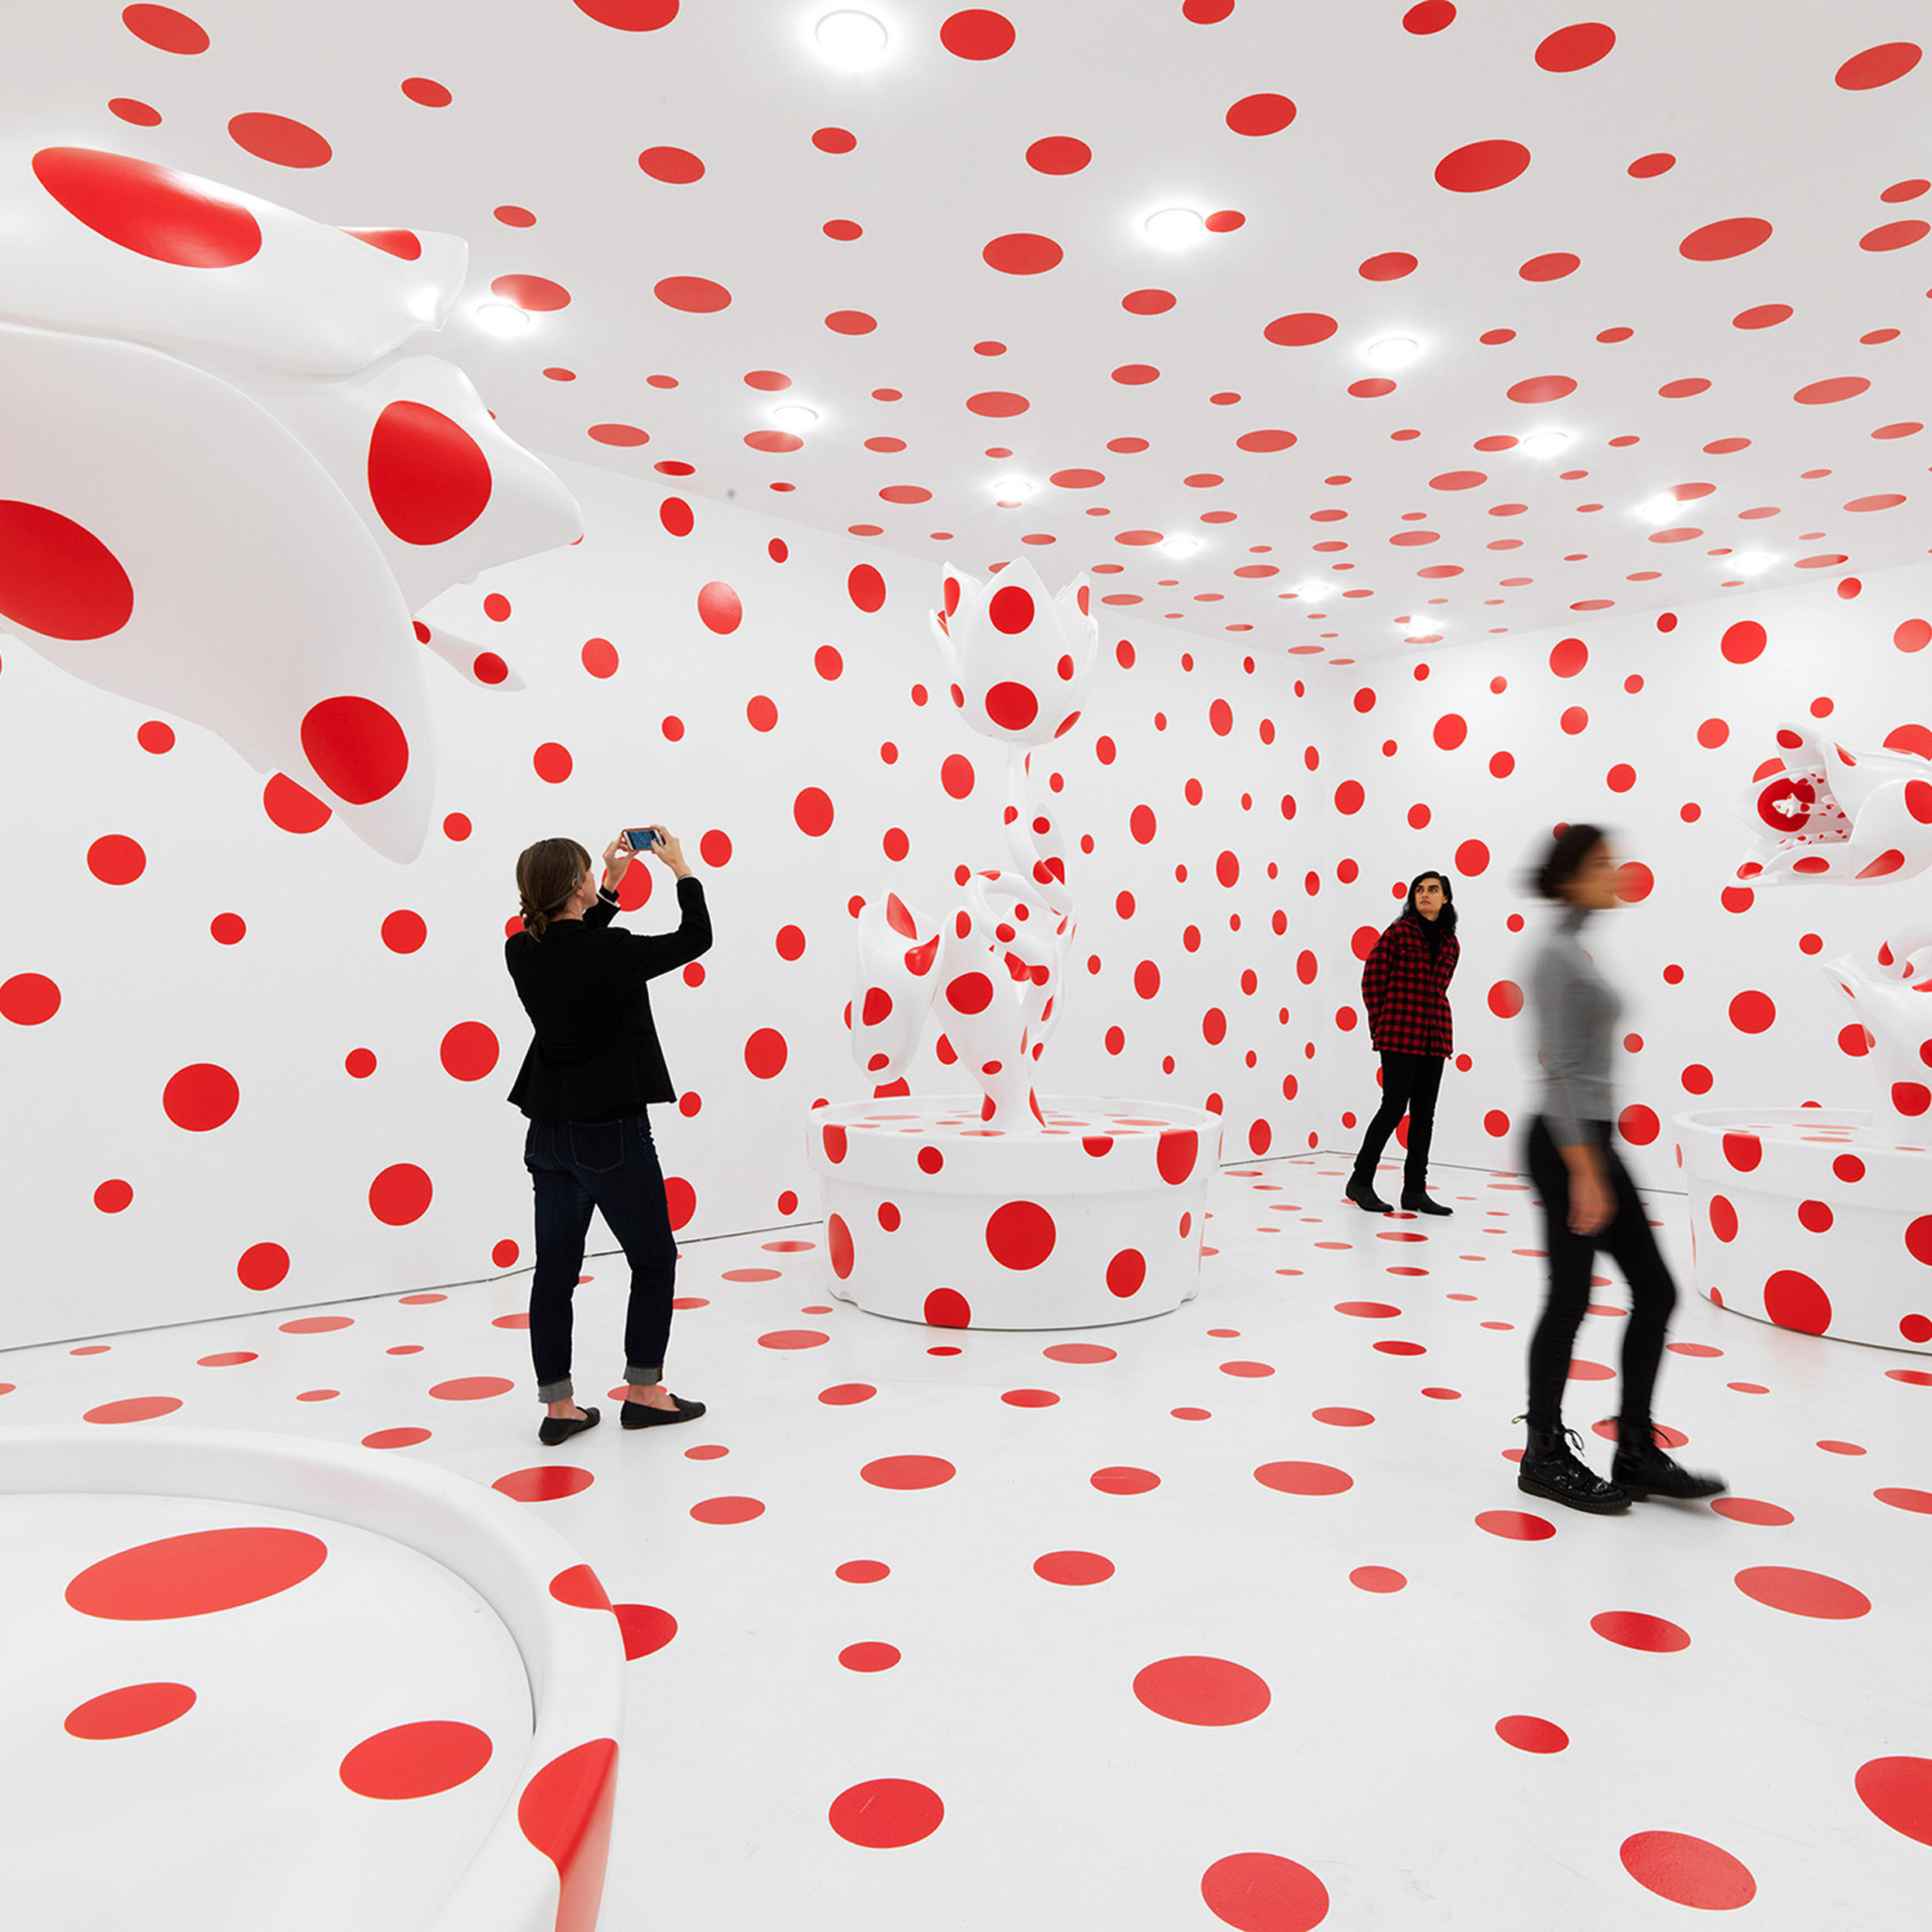 Yayoi Kusama's mirror rooms and polka-dot installations come to